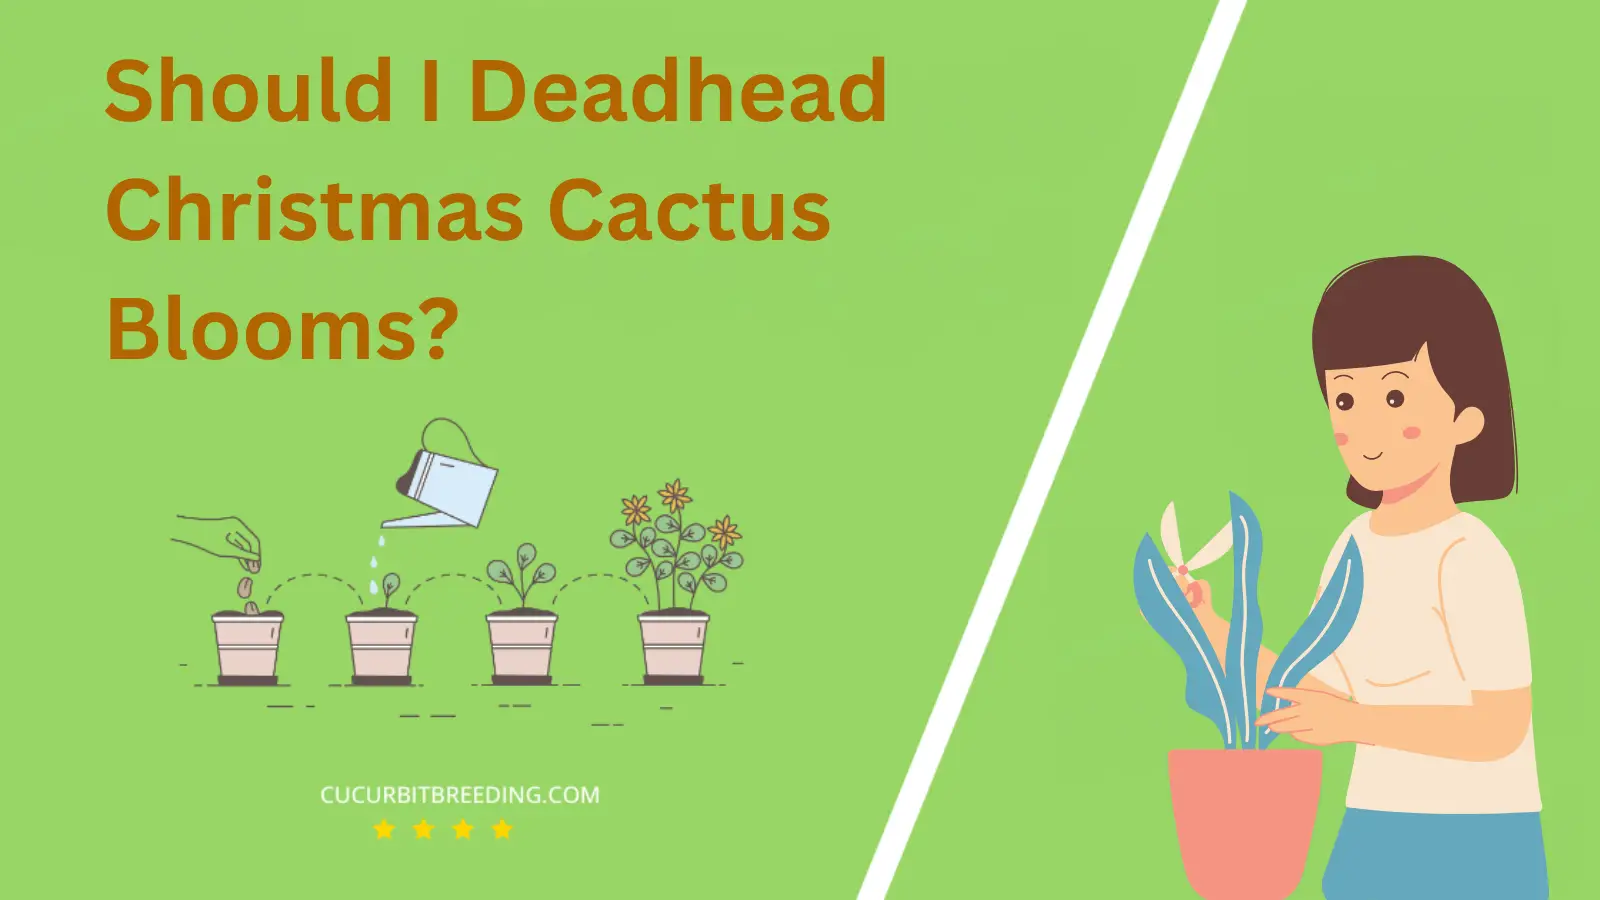 Should I Deadhead Christmas Cactus Blooms?